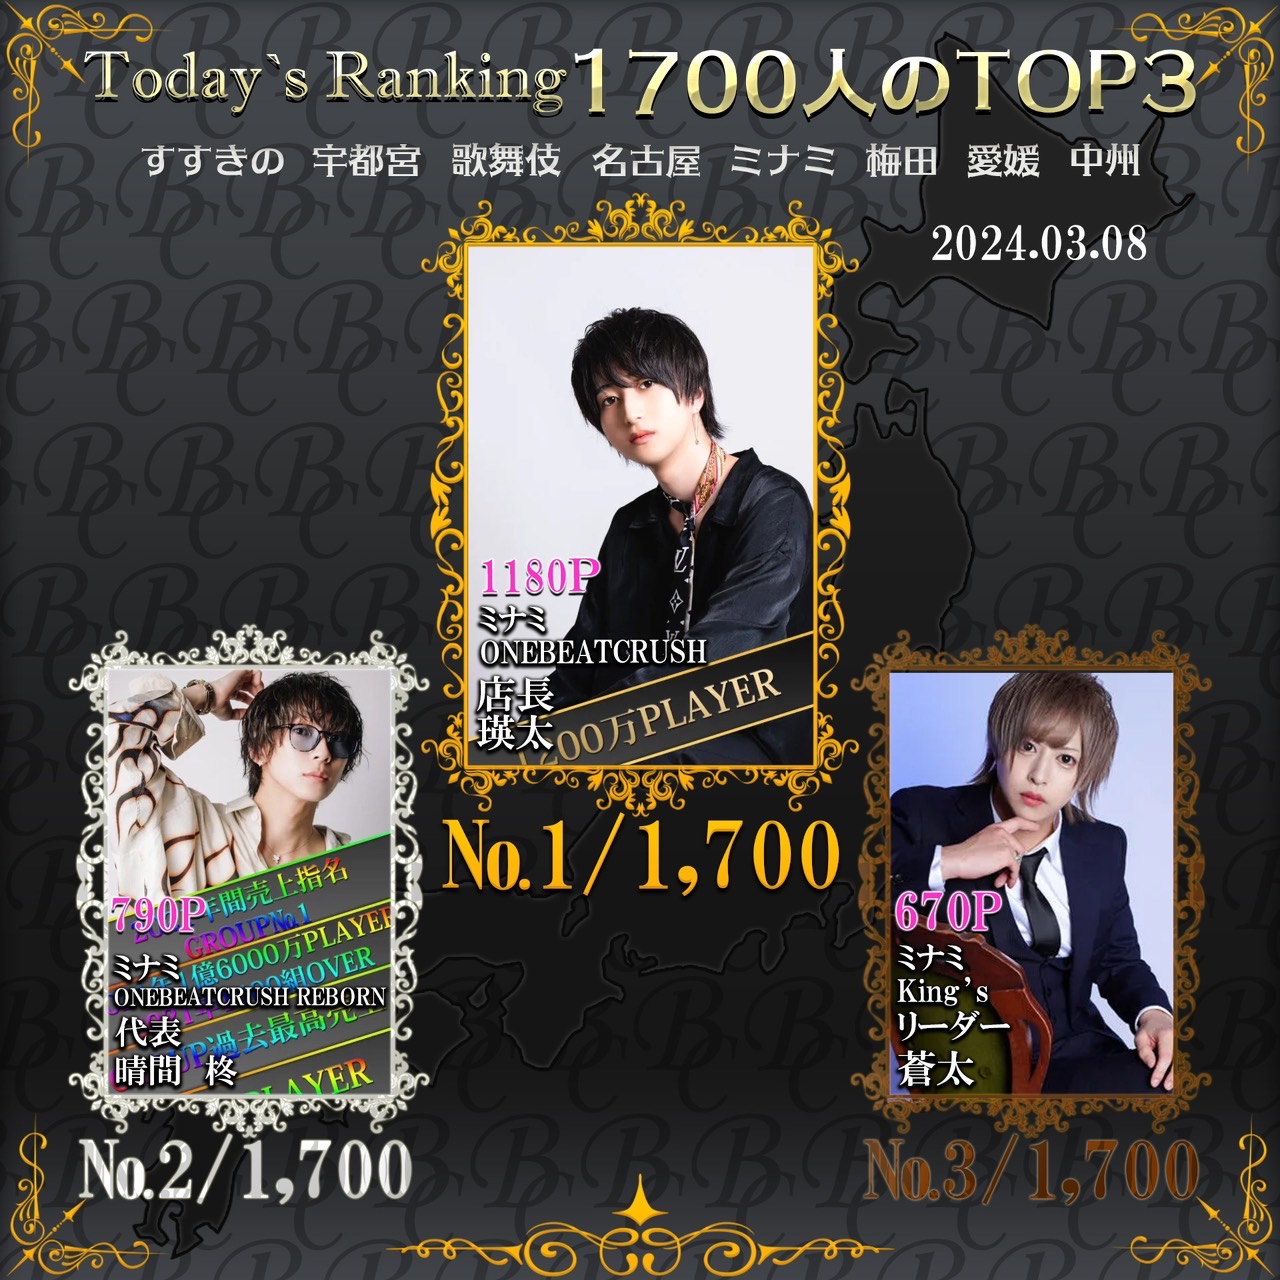 3/8 Today’s Ranking